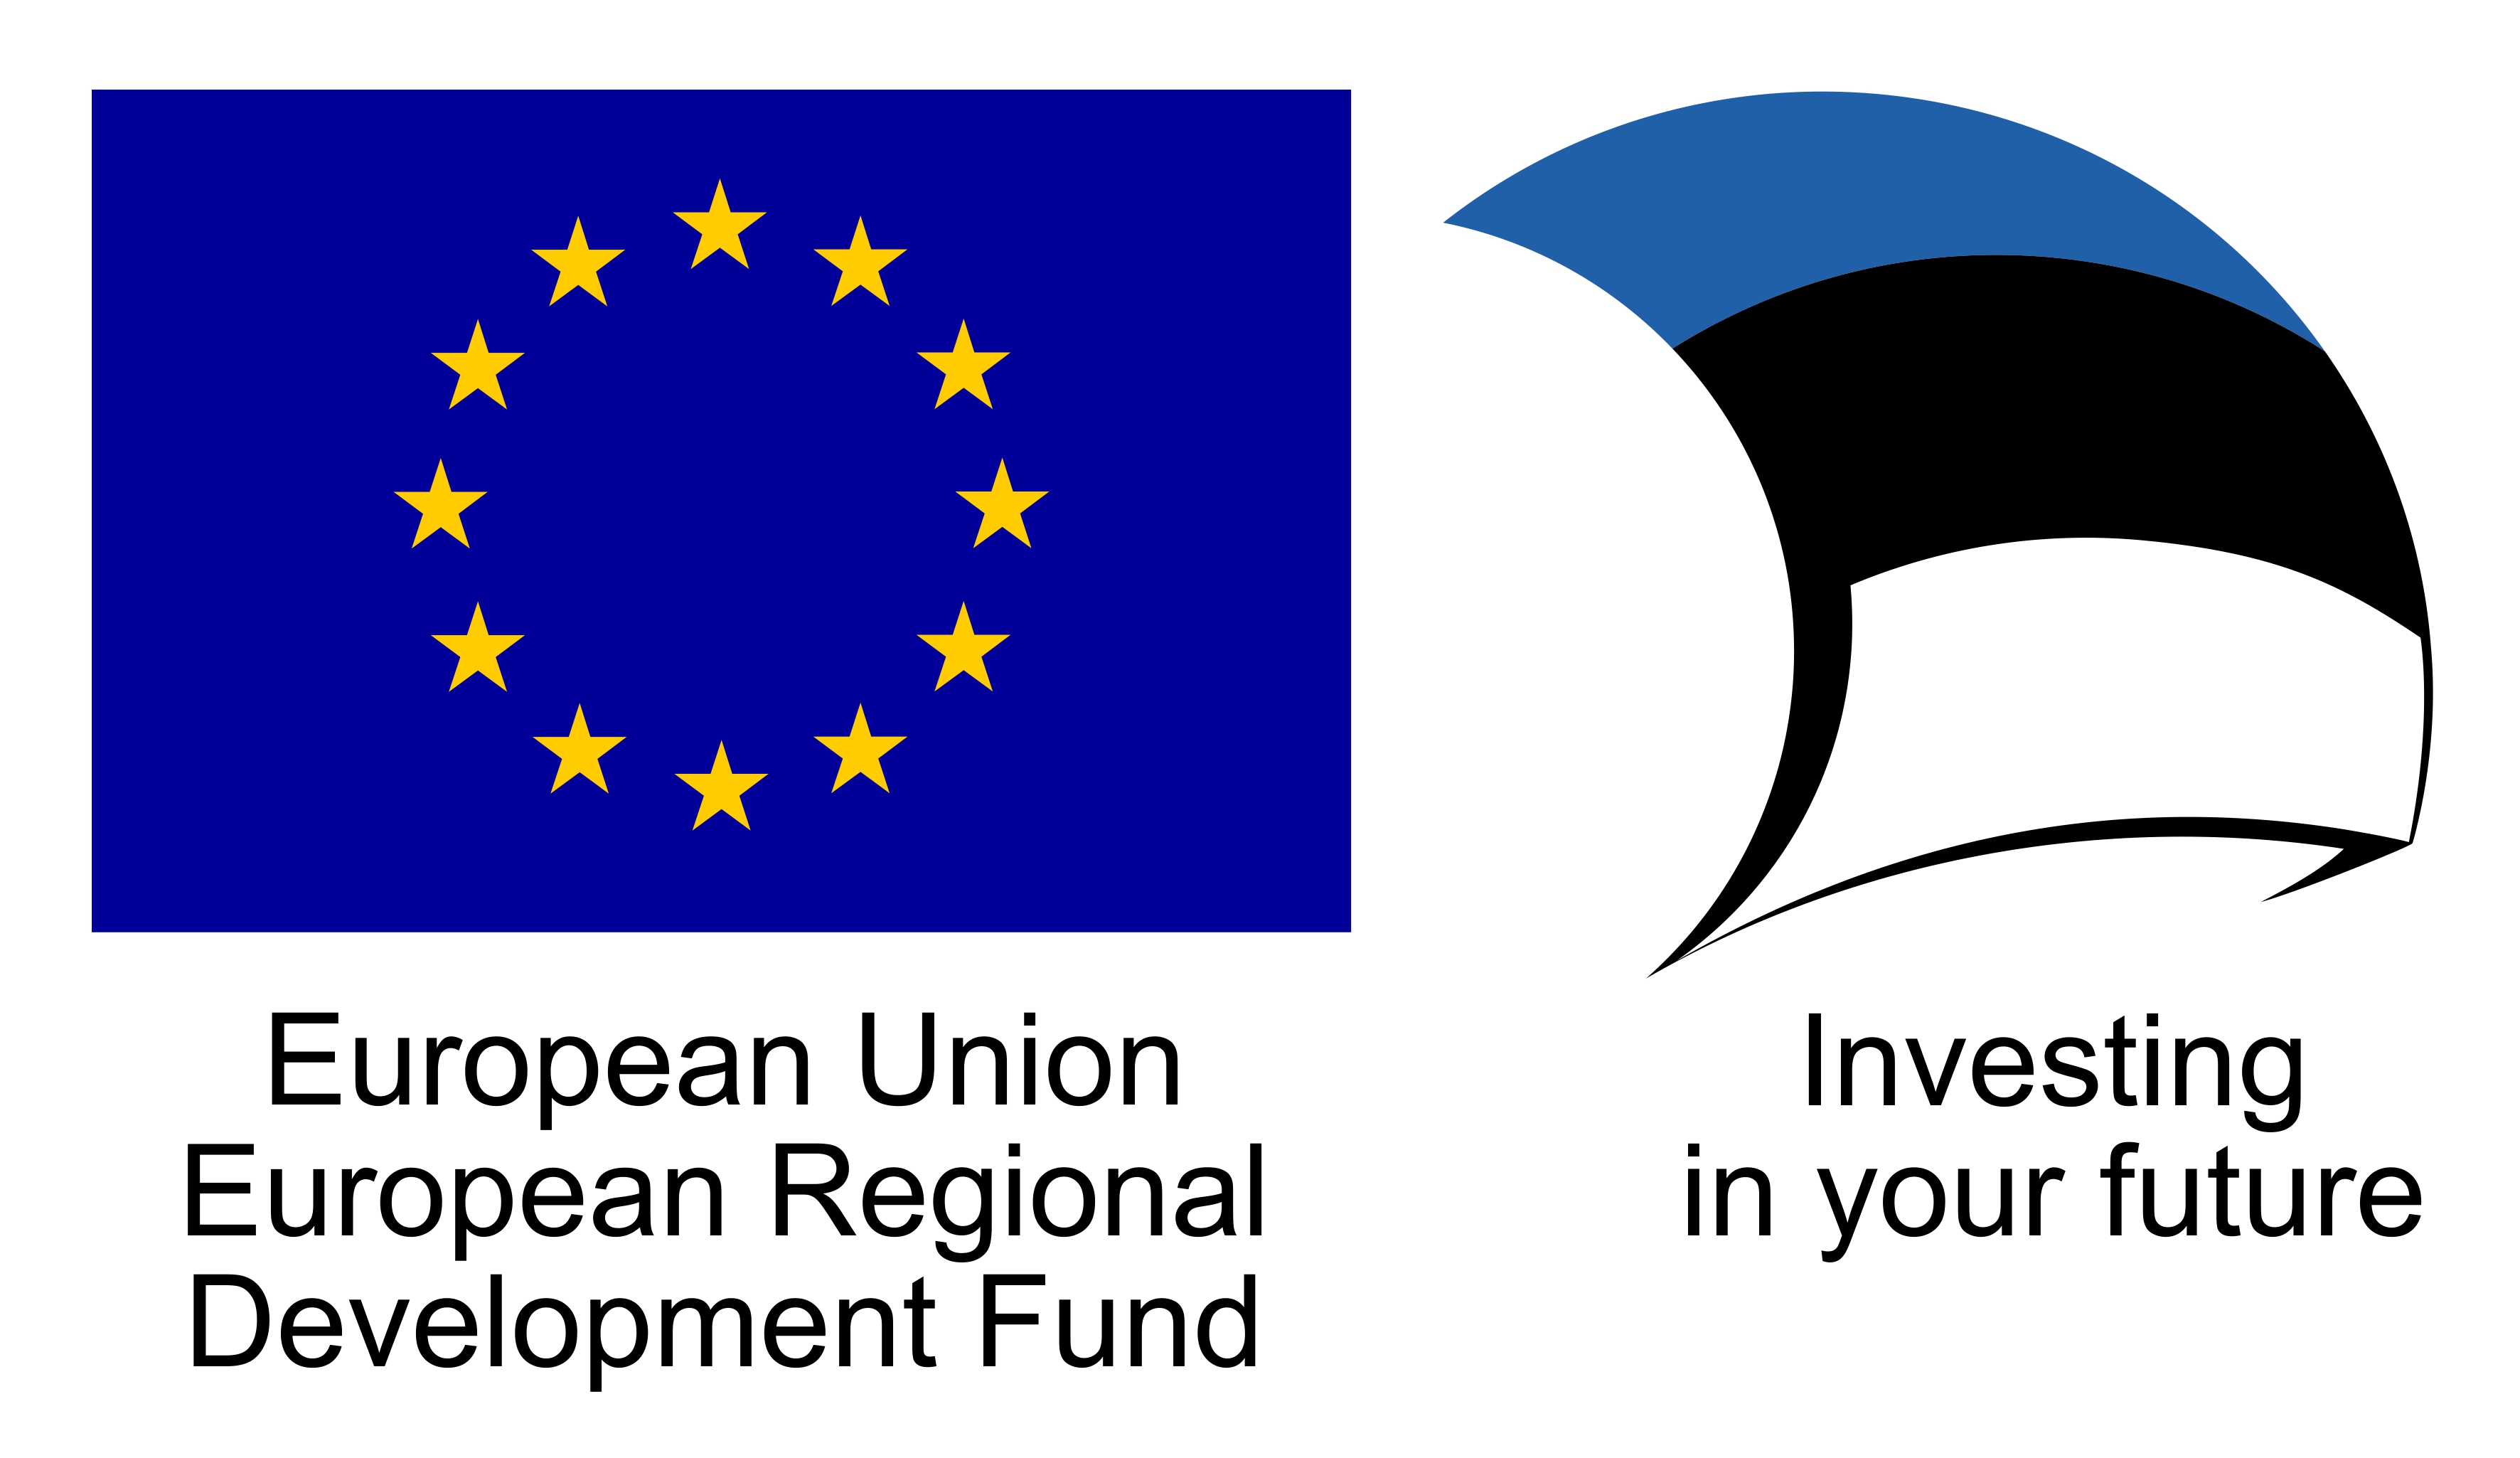 European Union European Regional Development Fund, Investing in your future